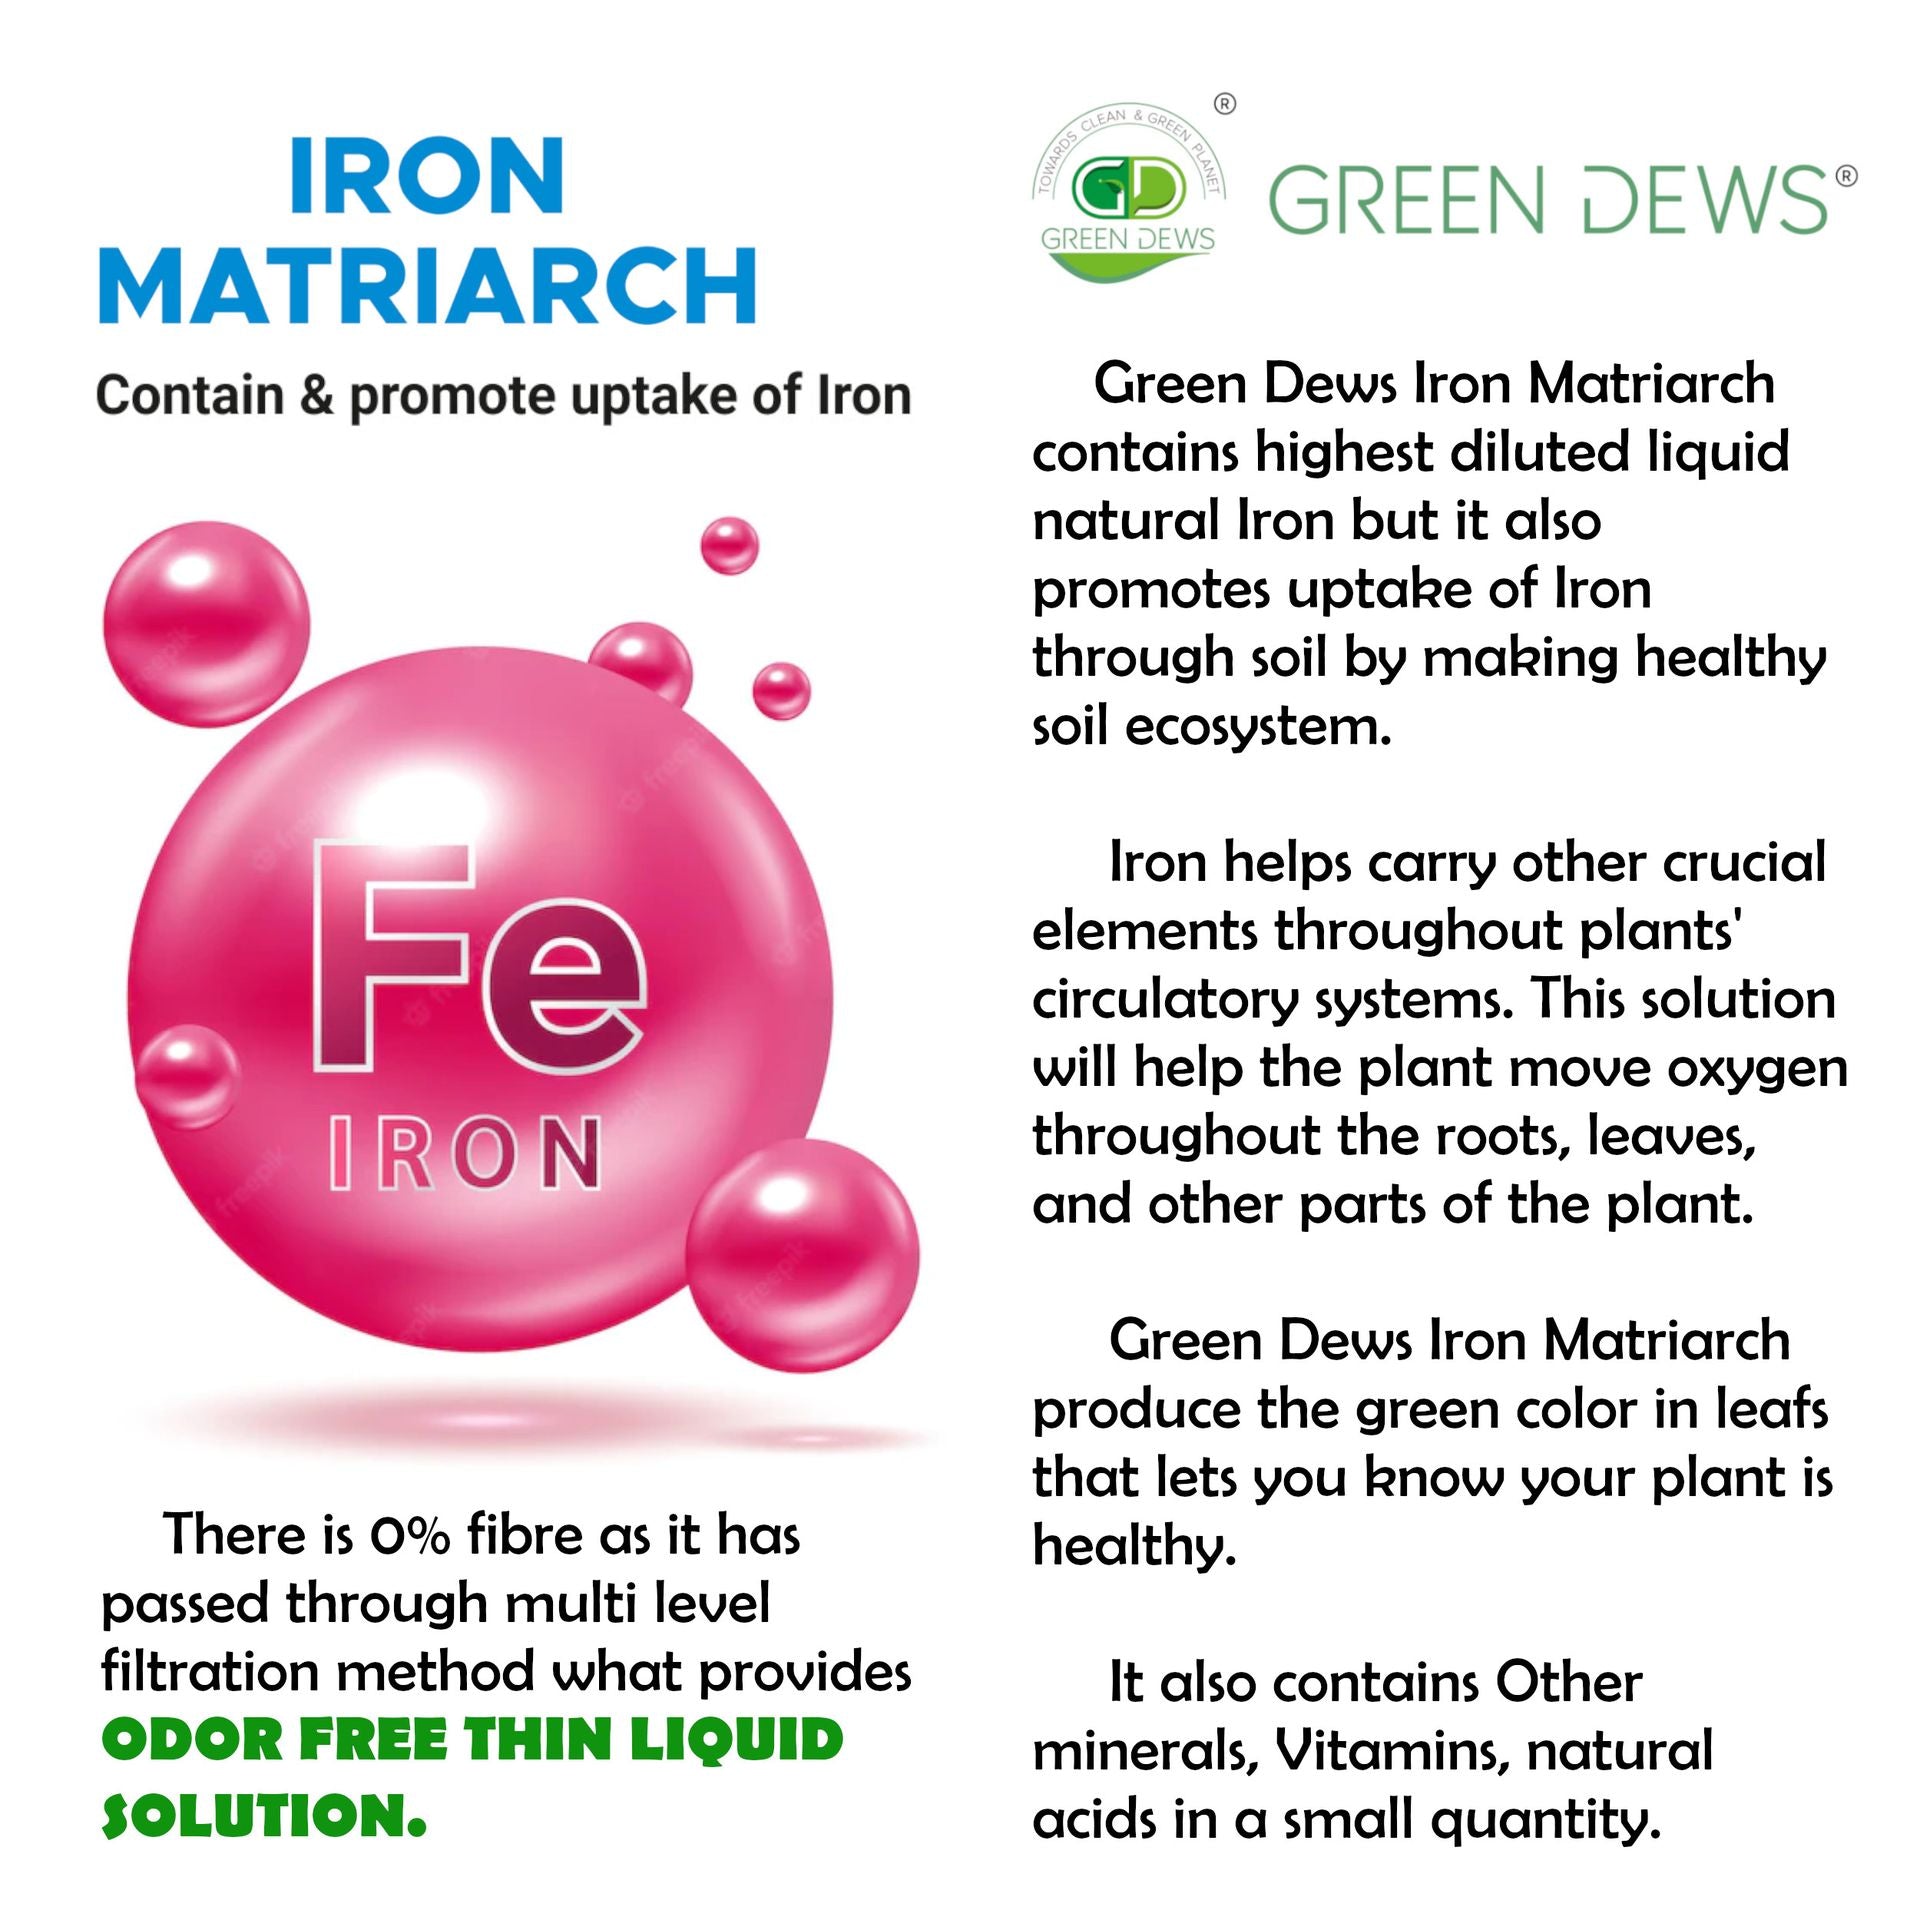 Green Dews IRON FERTILIZER FOR PLANTS ORGANIC LIQUID WATER SOLUBLE IRON MATRIARCH FOLIAR SPRAY substitute of - Iron -Fe EDTA Chelated Iron Dust Powder - hfnl!fe